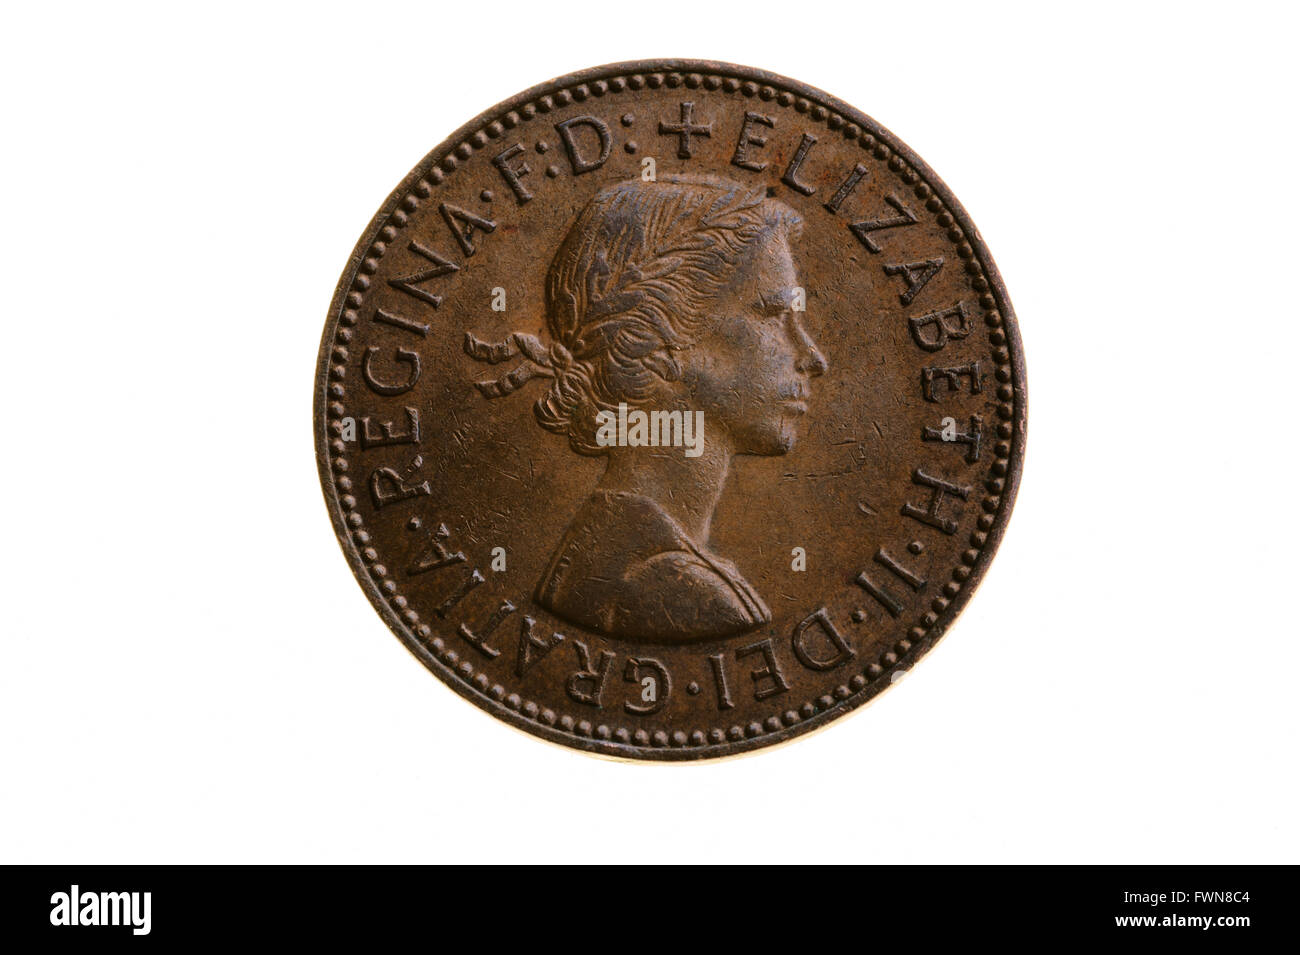 Old half penny, pre decimal coin. Stock Photo